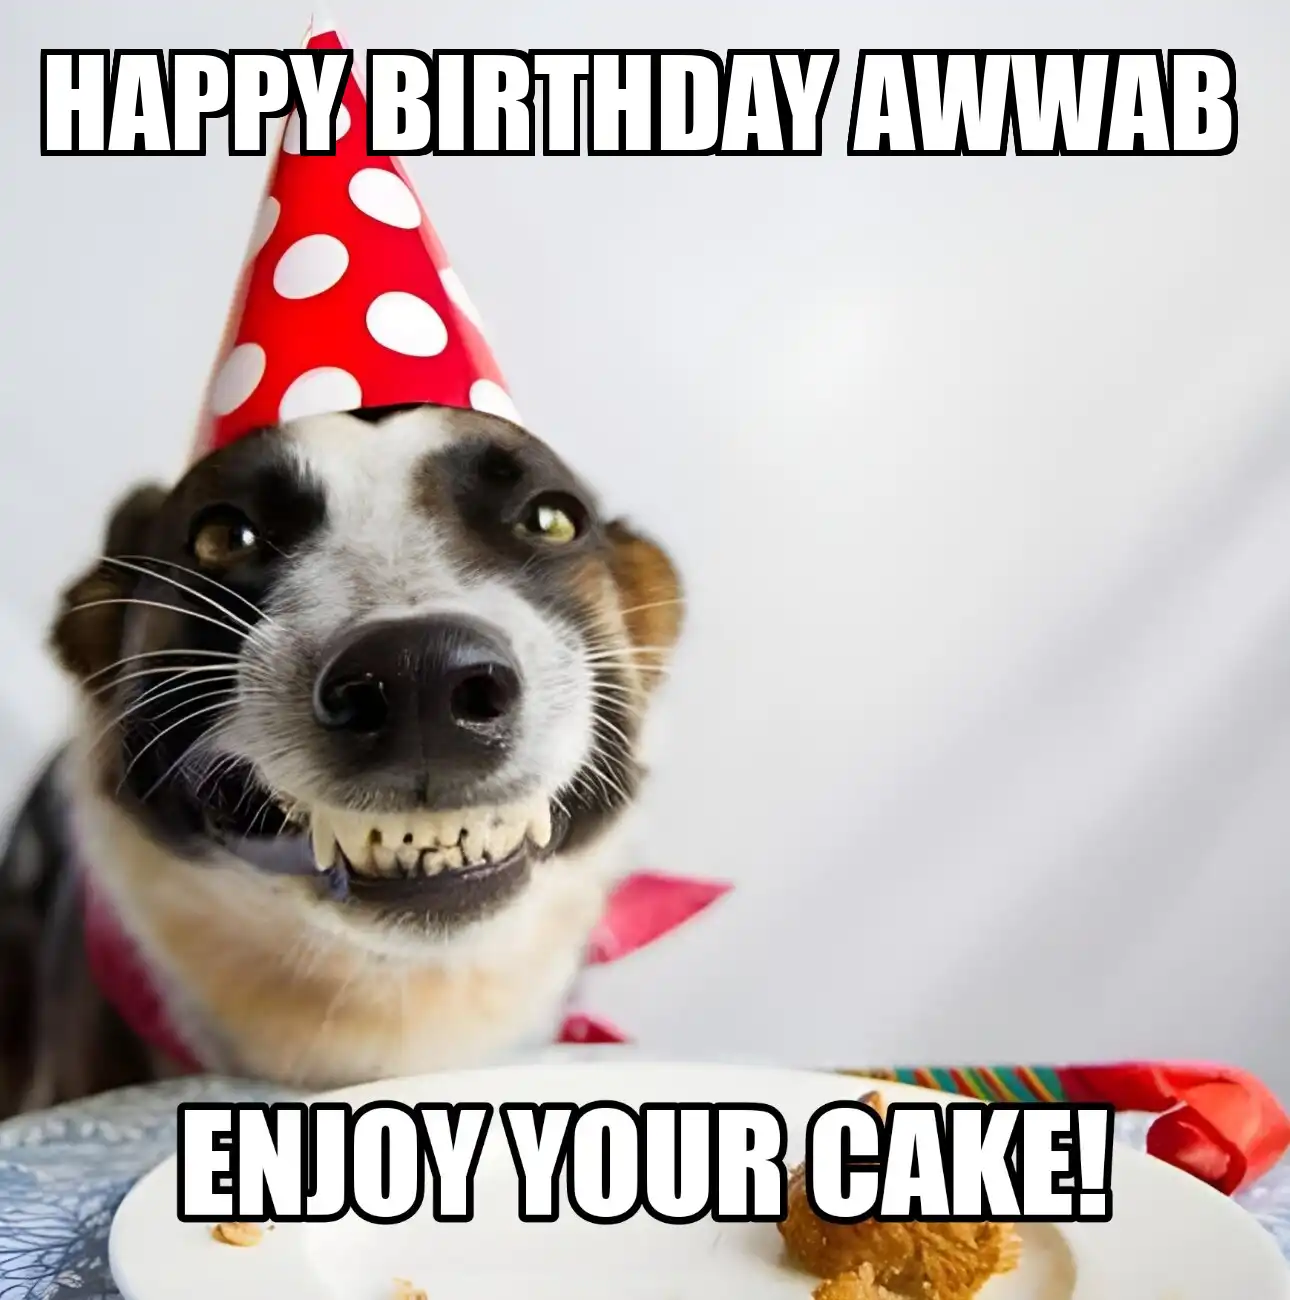 Happy Birthday Awwab Enjoy Your Cake Dog Meme